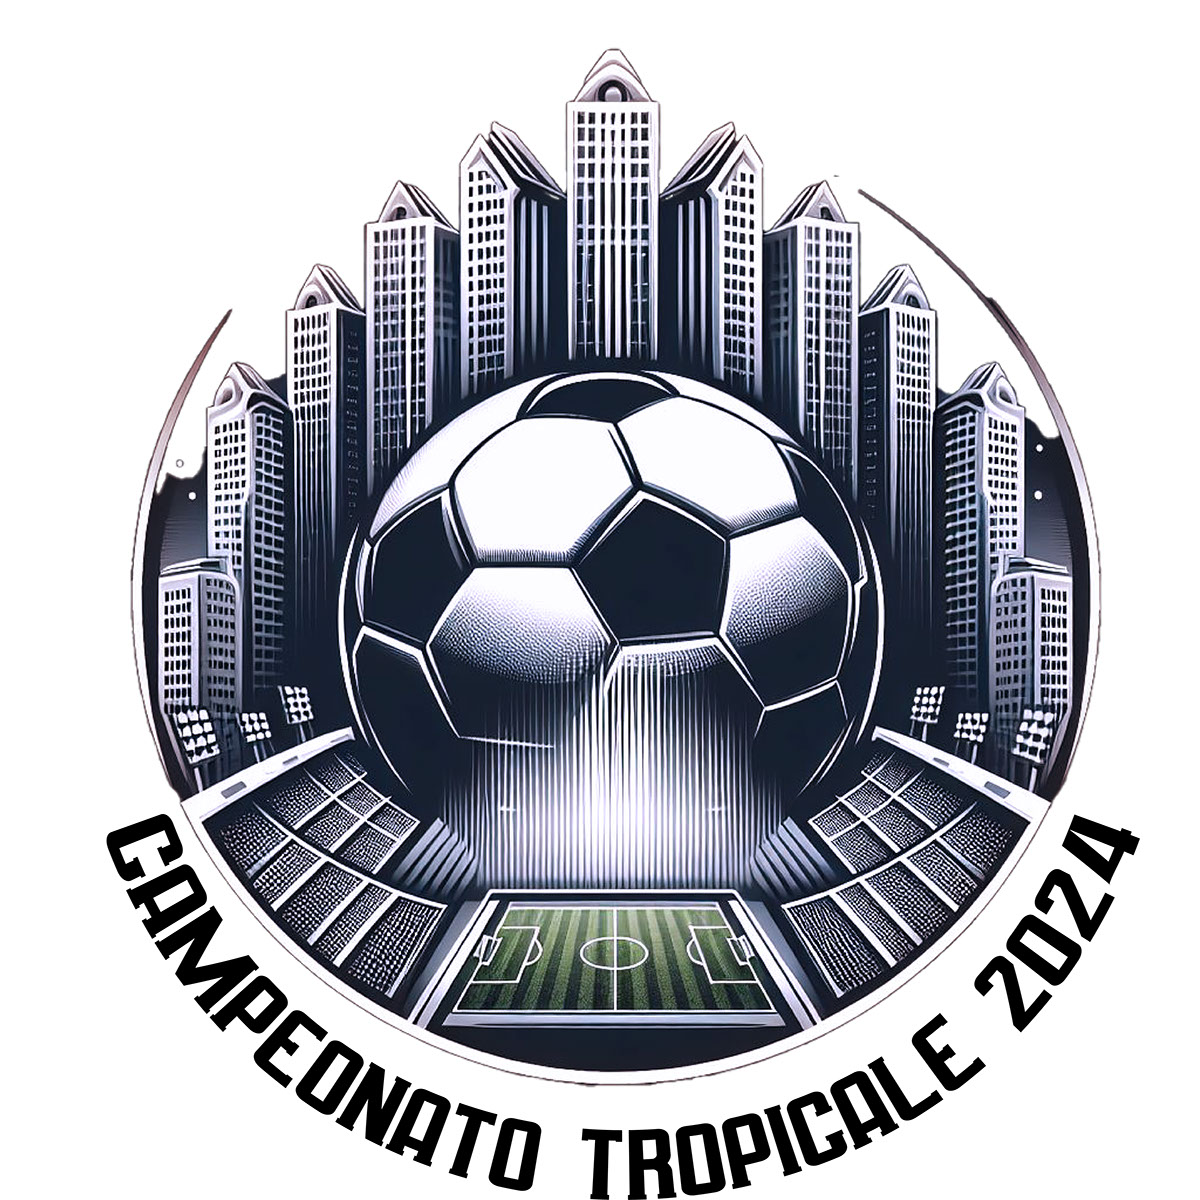 Campeonato Tropicale rendition image